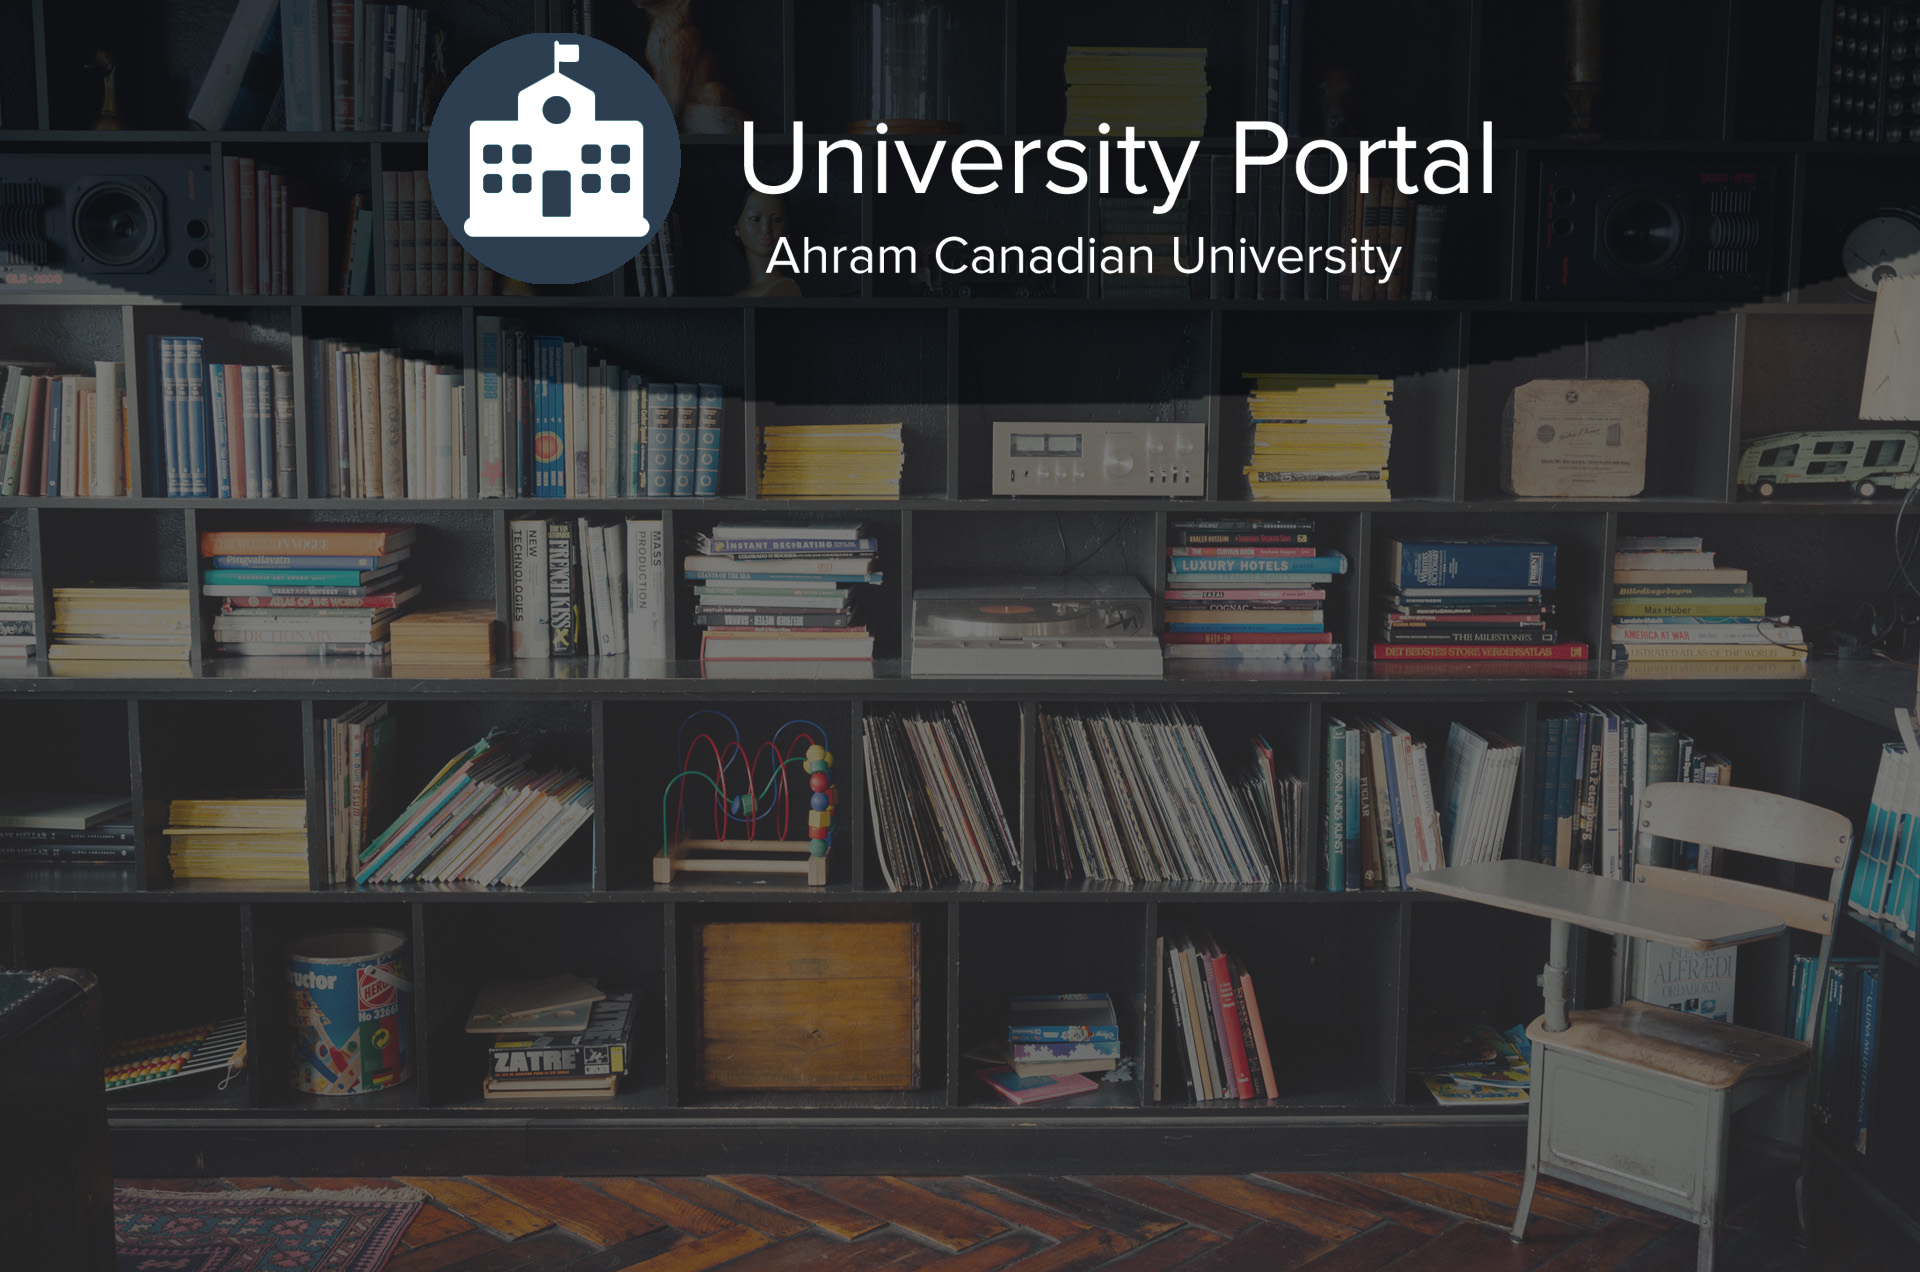 University Portal